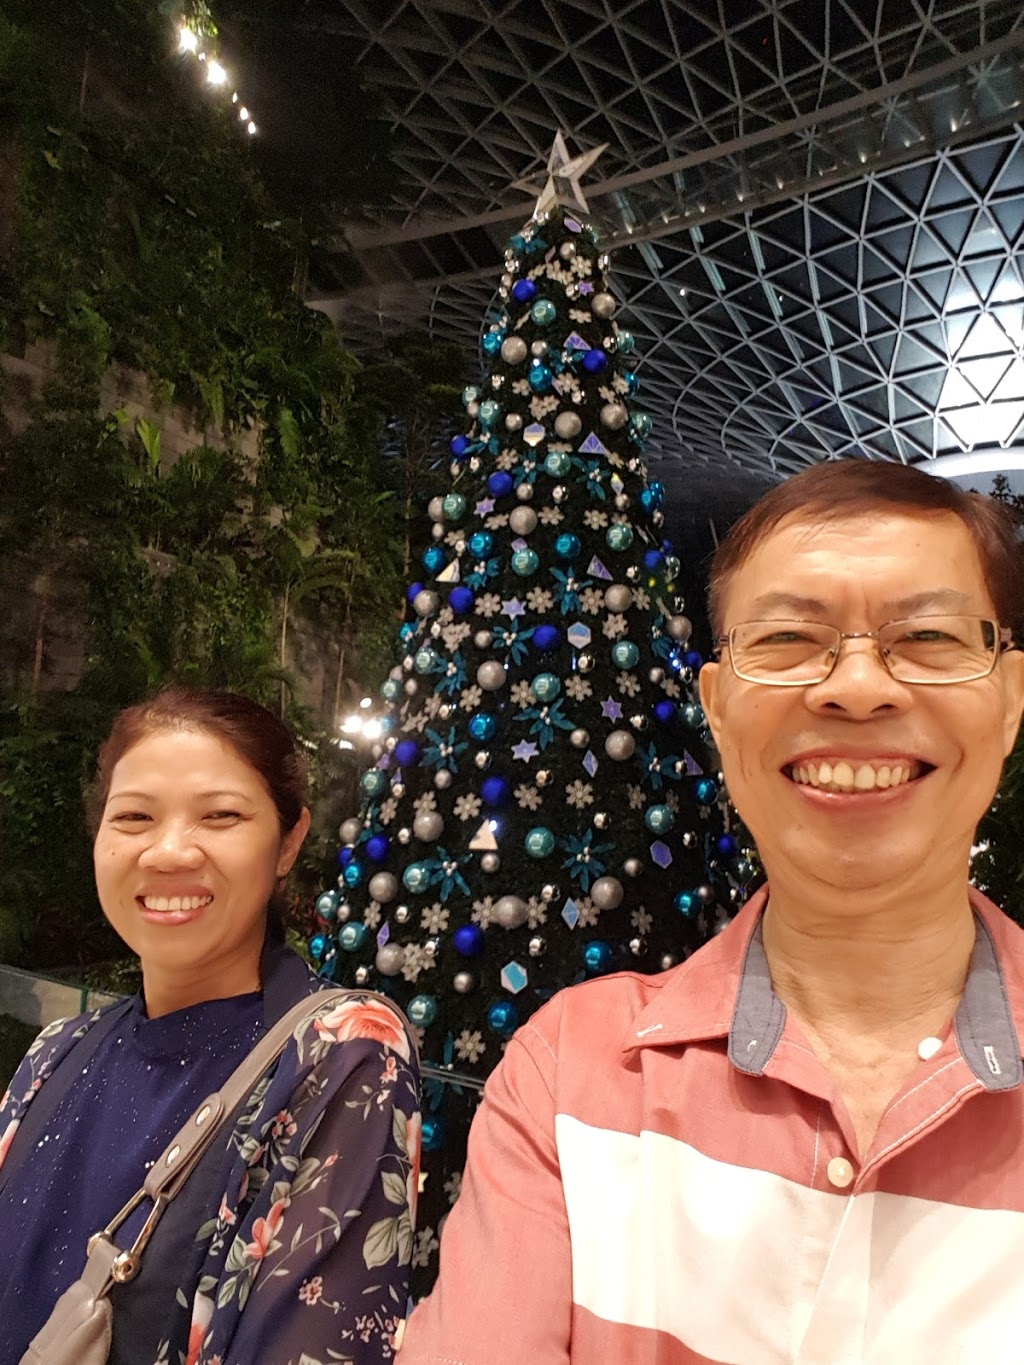 T3 Changi Singapore airport | clothing store | Jewells NSW 2280, Australia